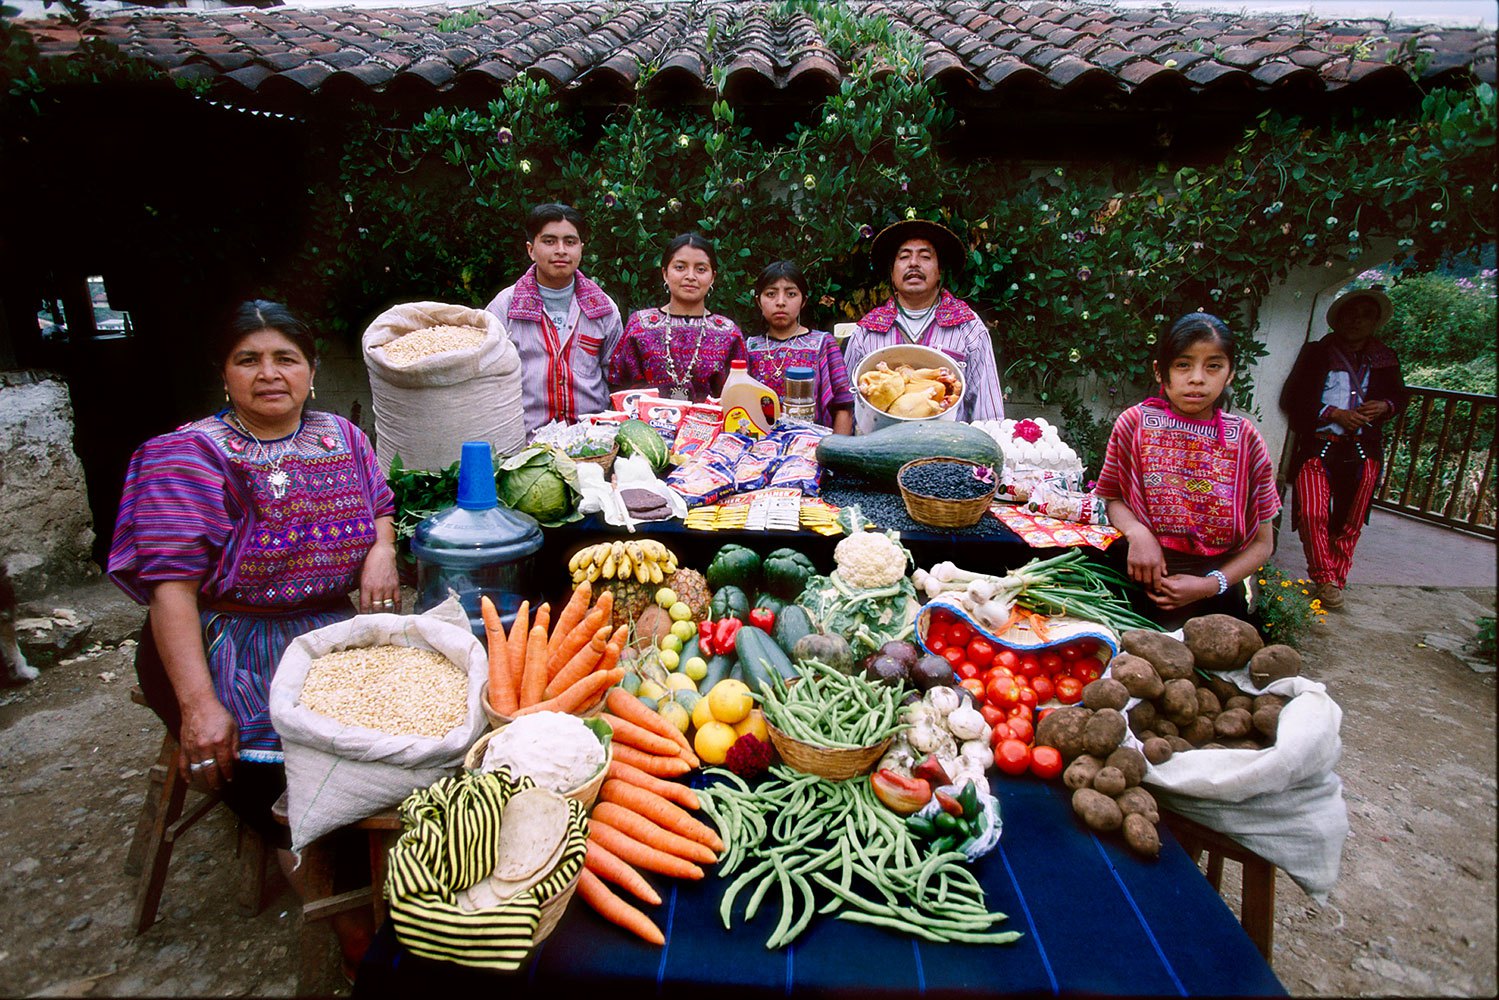 Guatemala: The Mendozas of Todos Santos - Food expenditure for one week: 573 Quetzales or $75.70. Family Recipe: Turkey Stew and Susana Perez Matias's Sheep Soup.